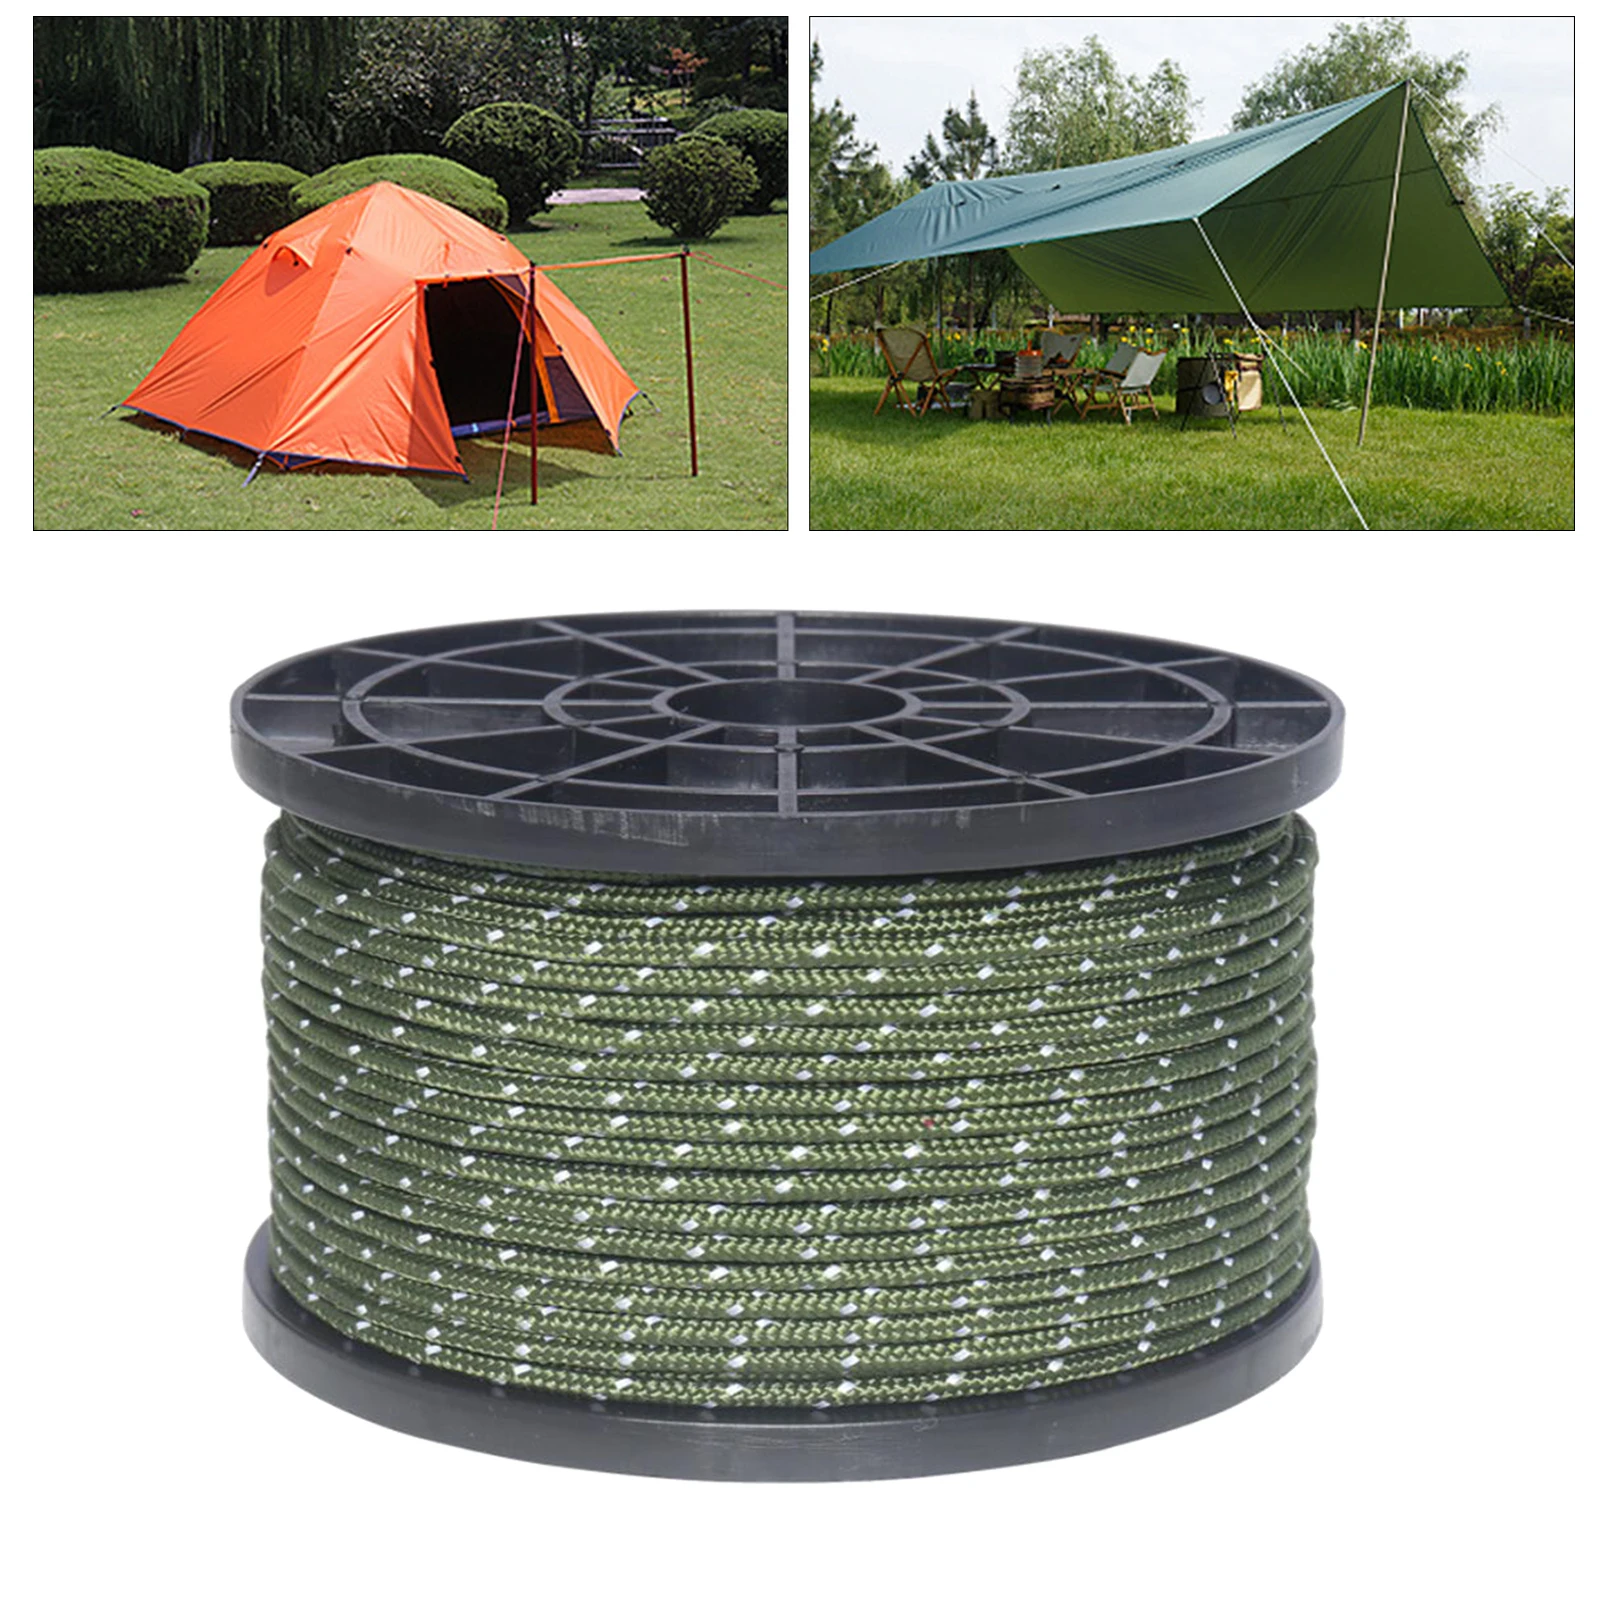 55 Yard Nylon Reflective Guyline 6 Strand Tent Awning Gazebo Tarp Rope Cord Guide Sun Shade Hiking Accessories 3mm